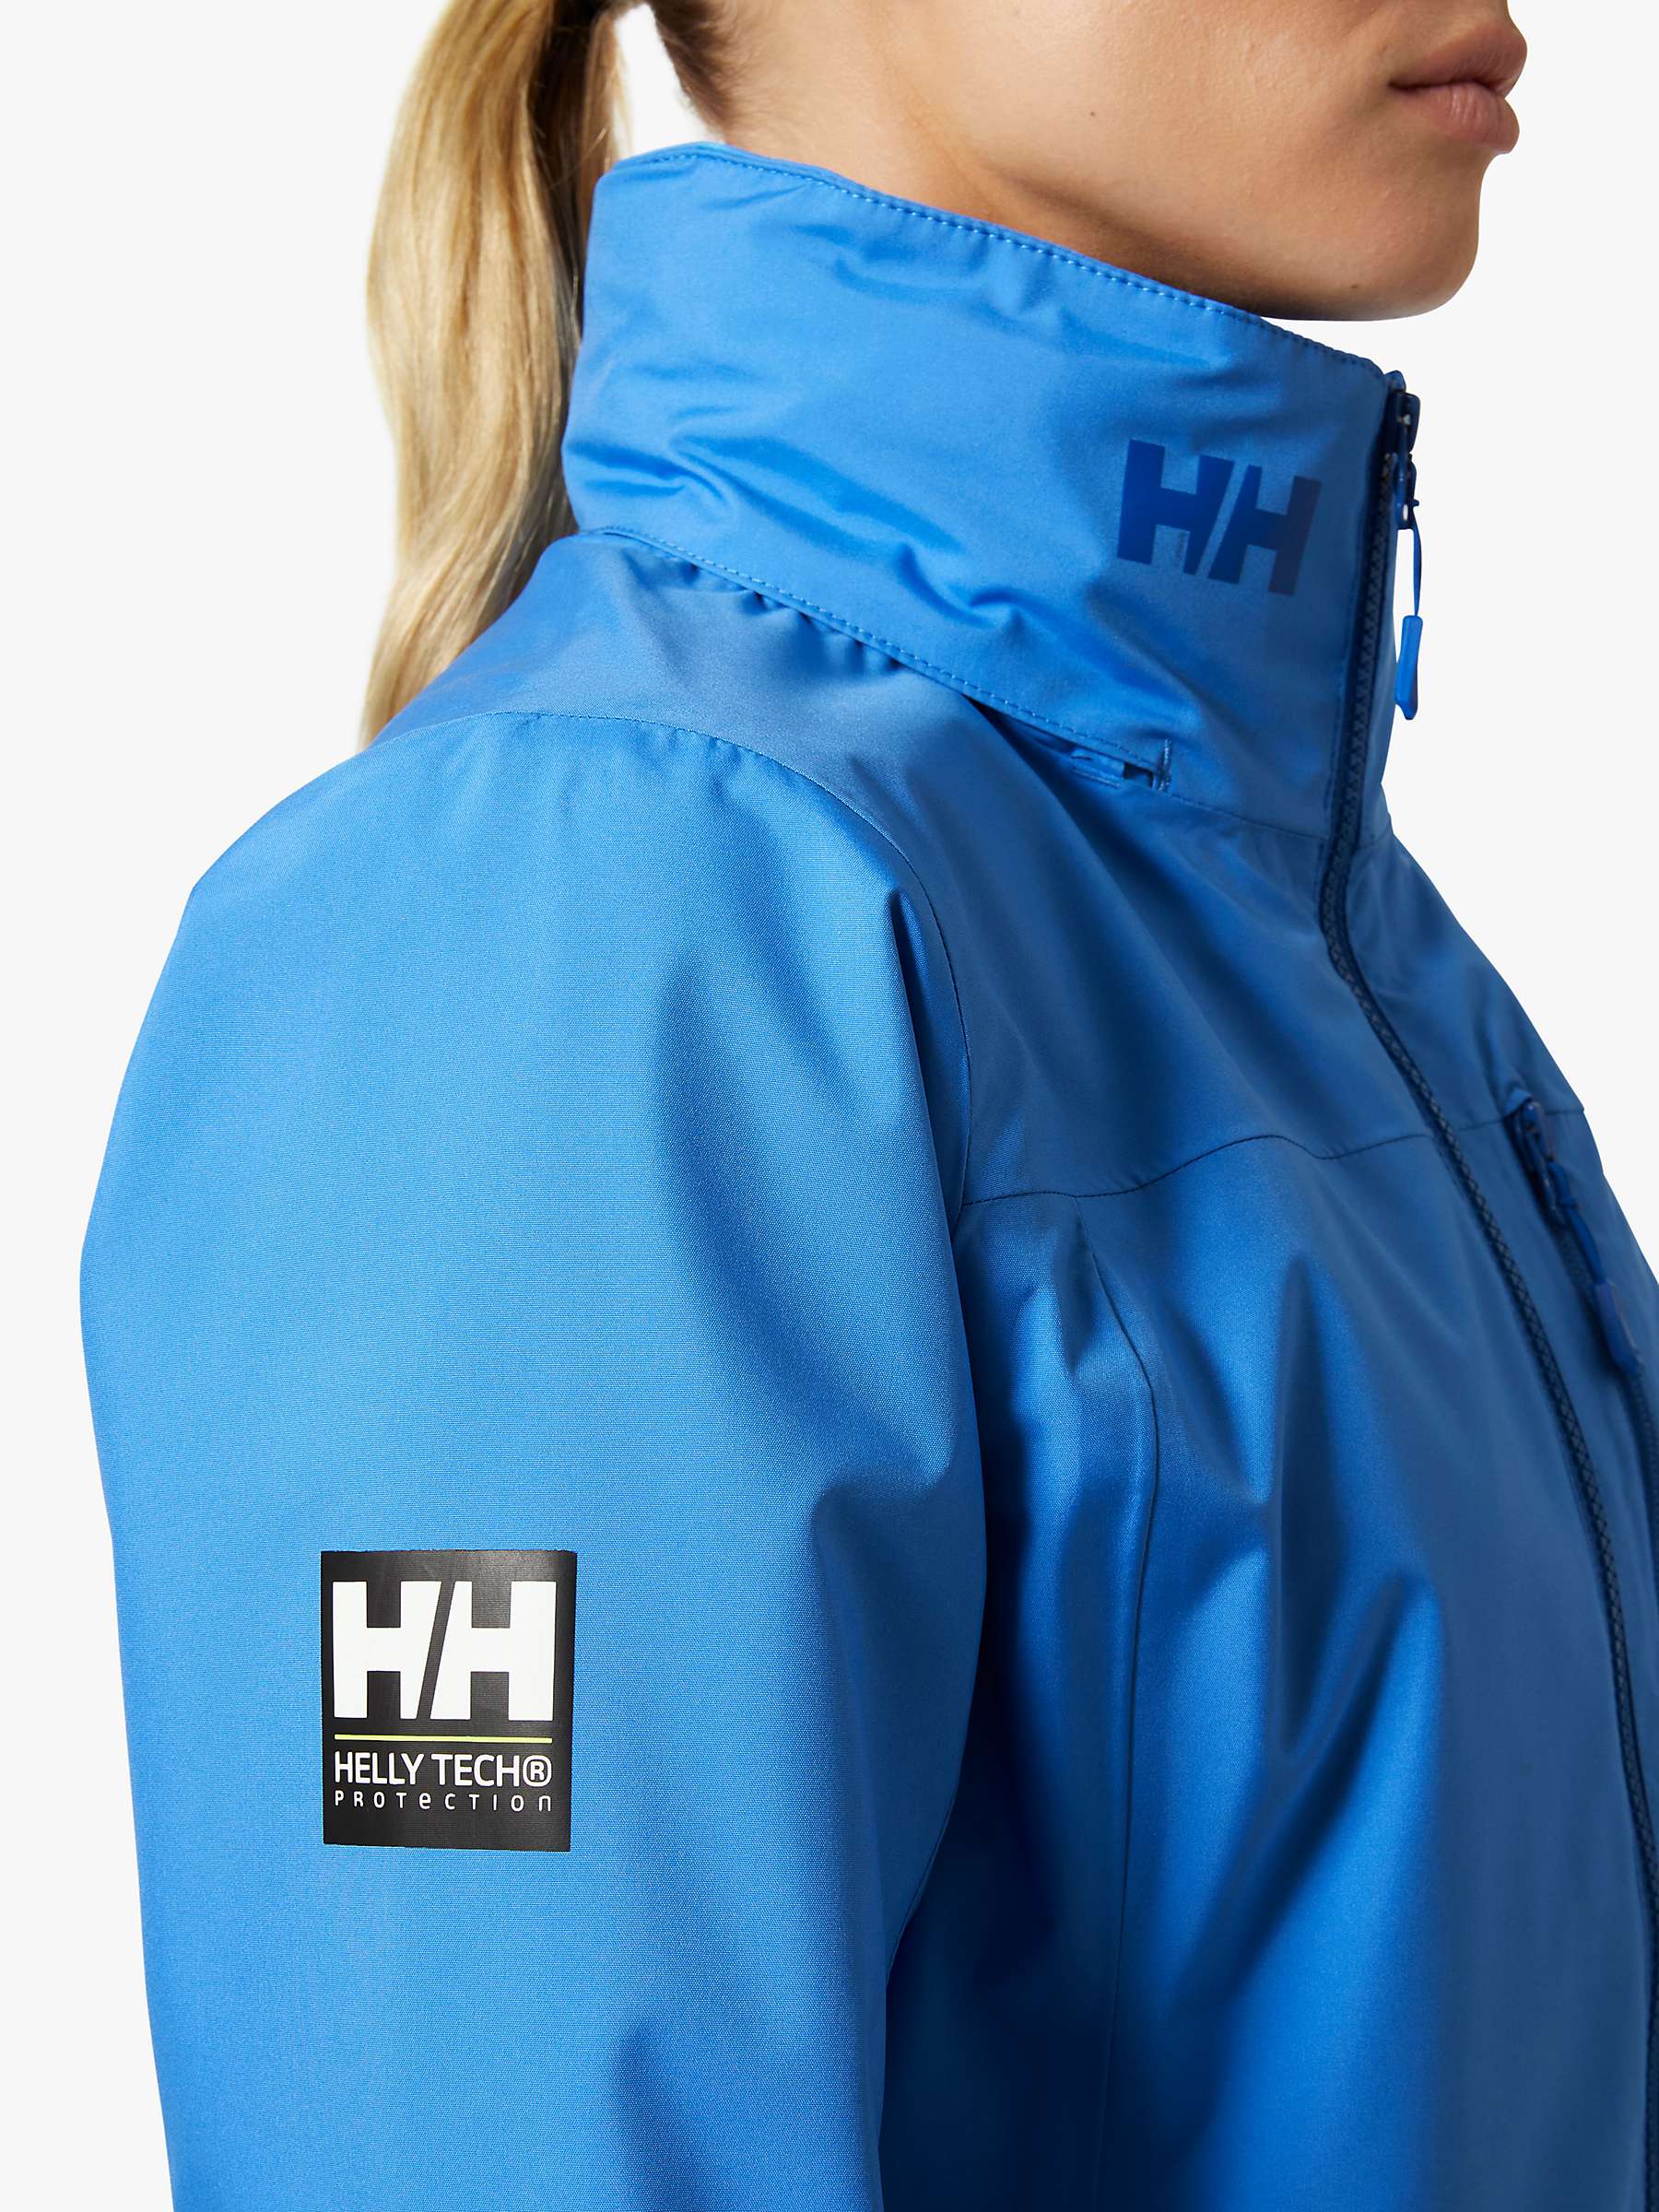 Buy Helly Hansen Women's Crew Hooded Jacket Online at johnlewis.com